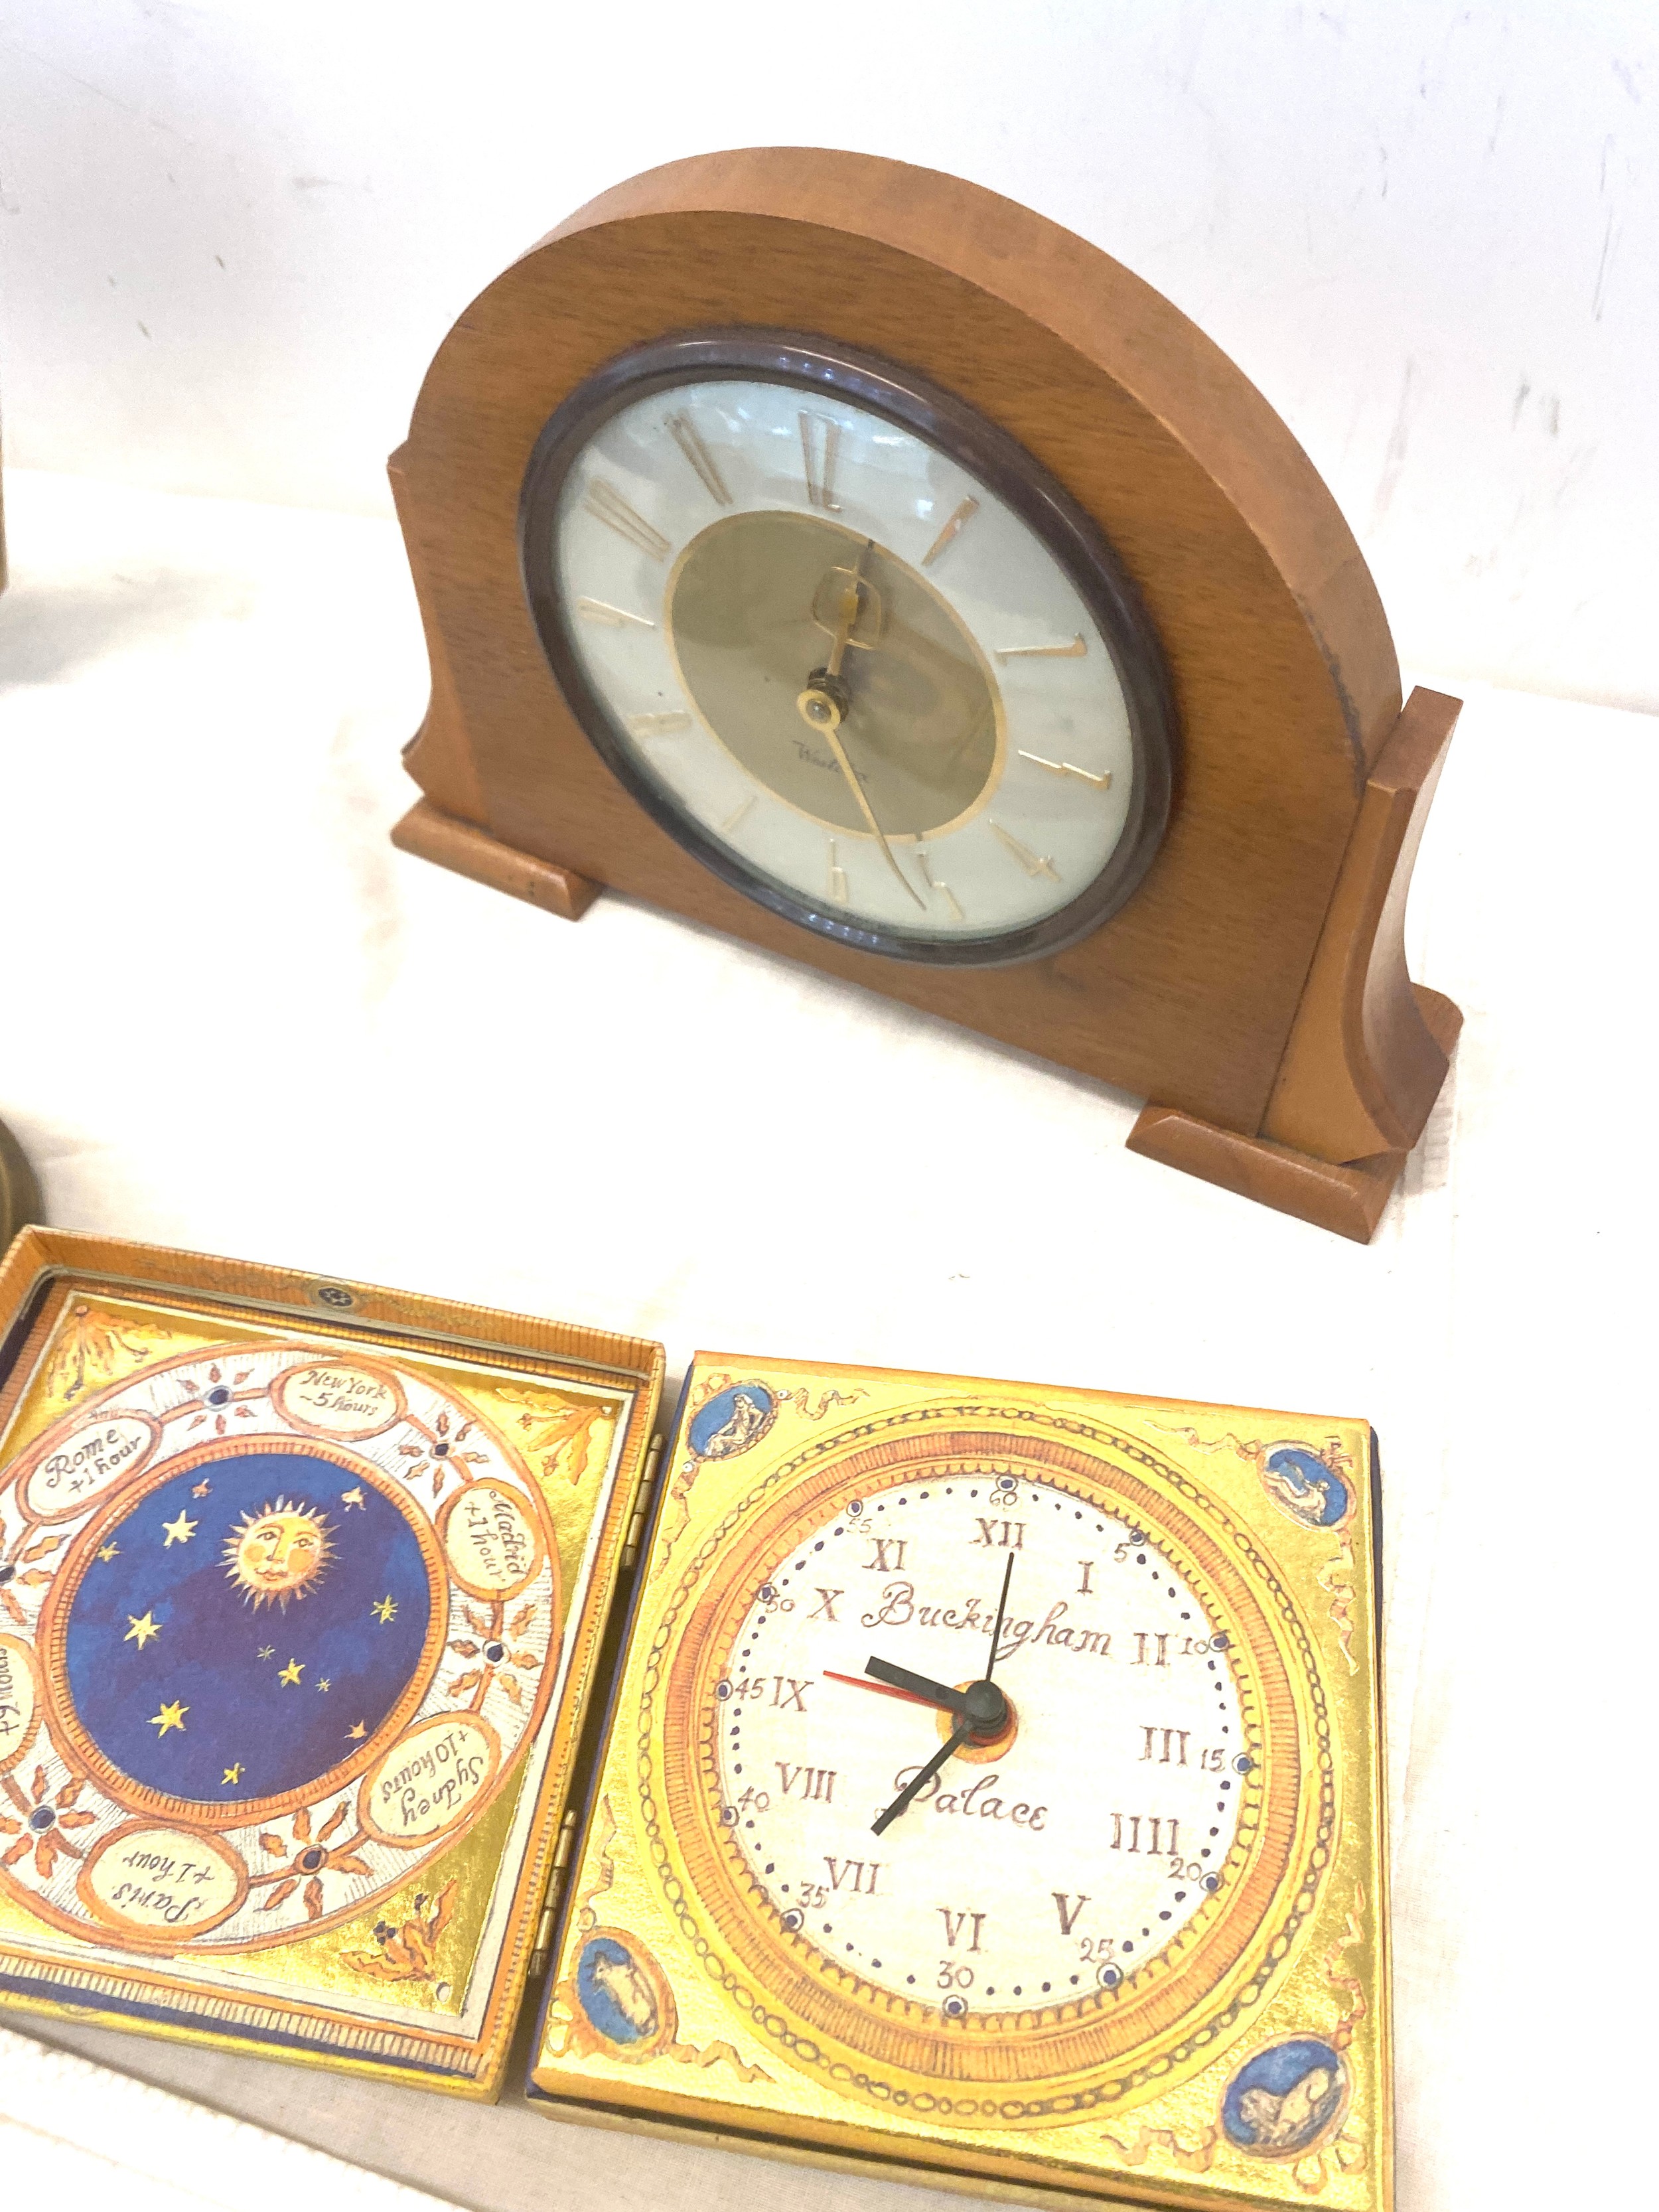 Selection of assorted clocks includes mantel clocks, carriage clocks etc - Image 3 of 4